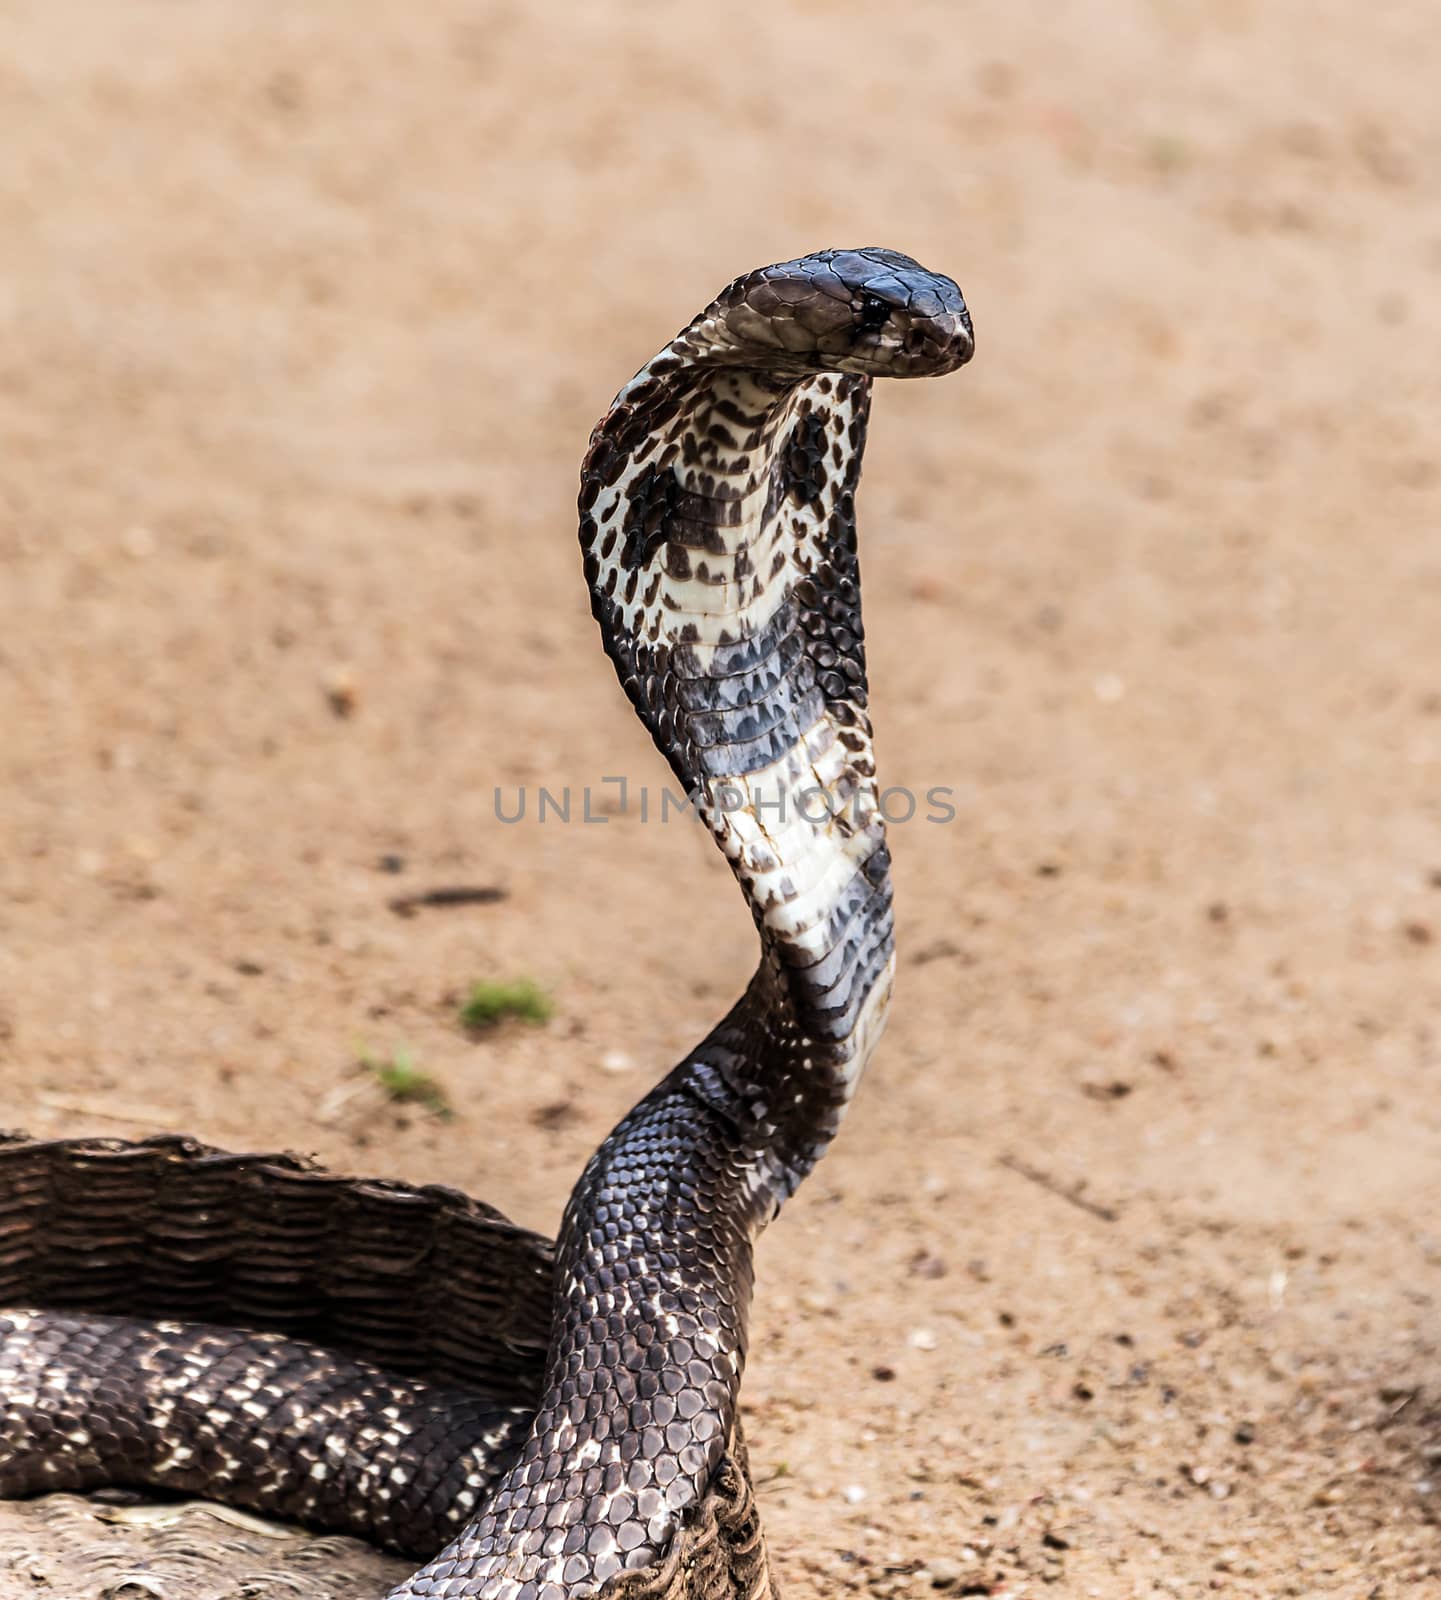 king cobra in its defensive posture hoods extended